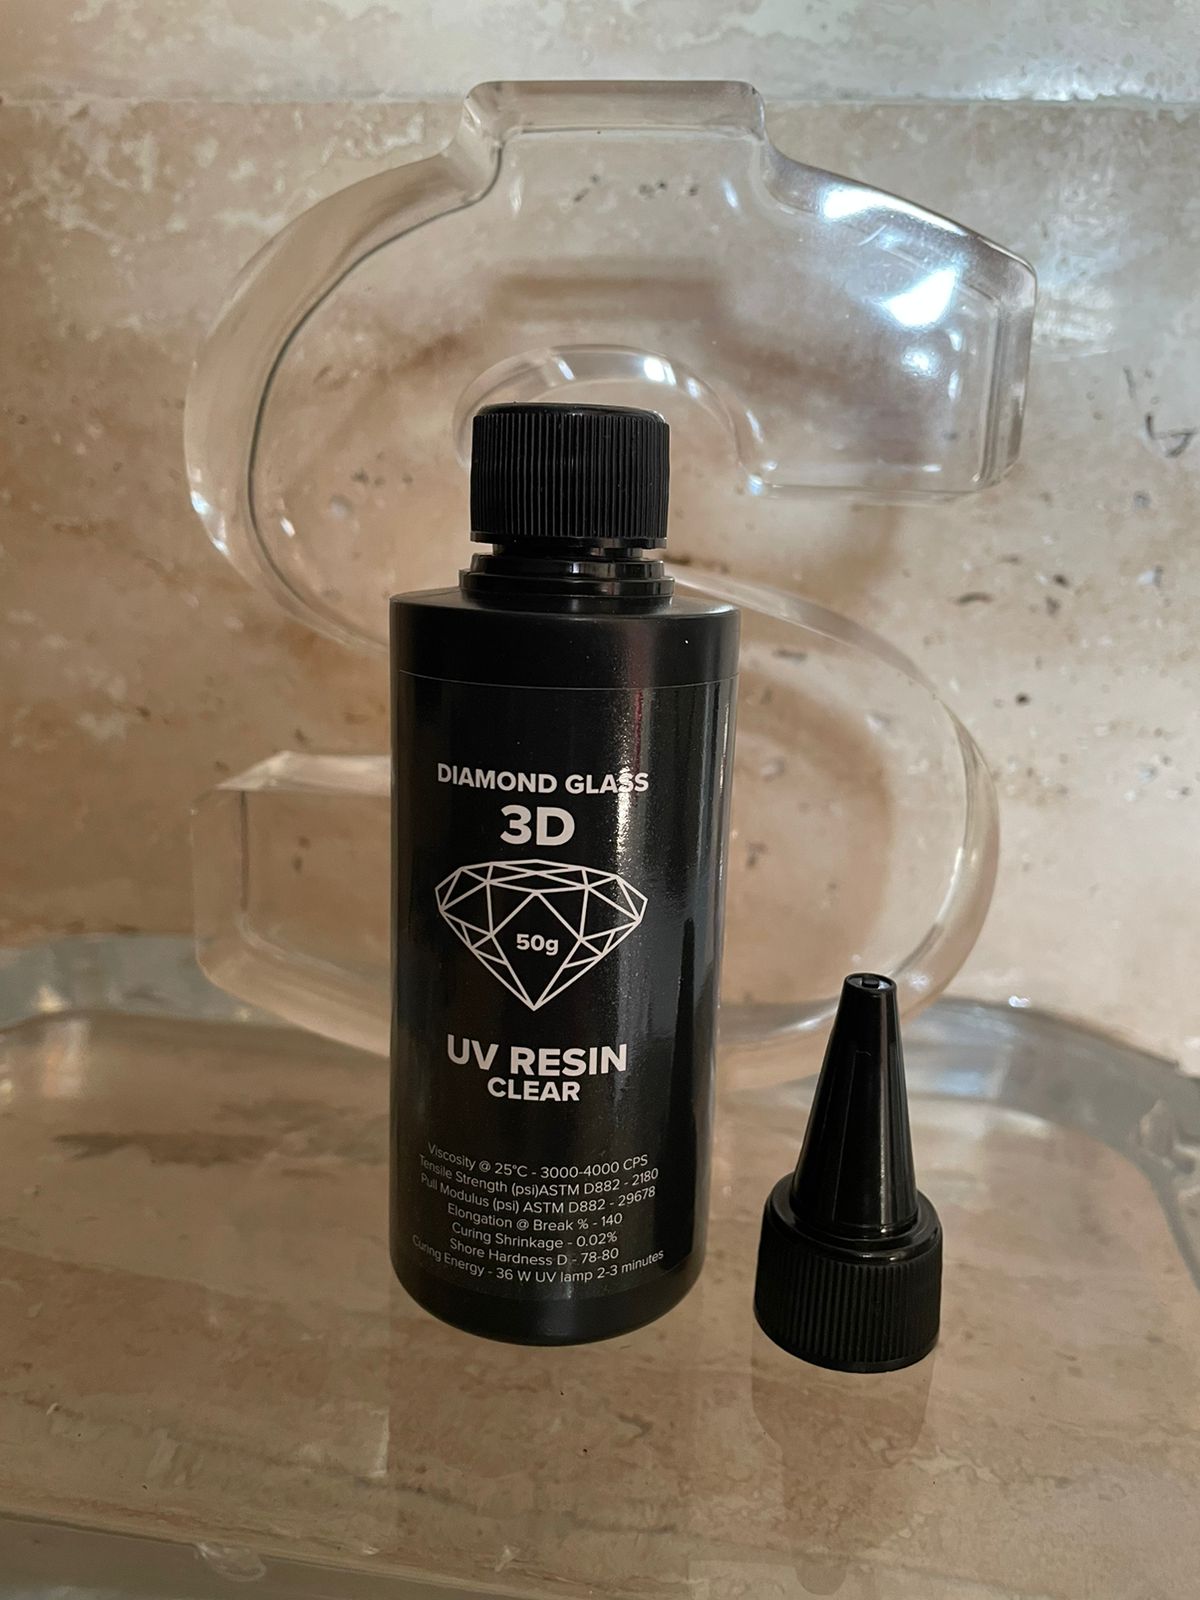 UV RESIN CLEAR 50G - DIAMOND GLASS